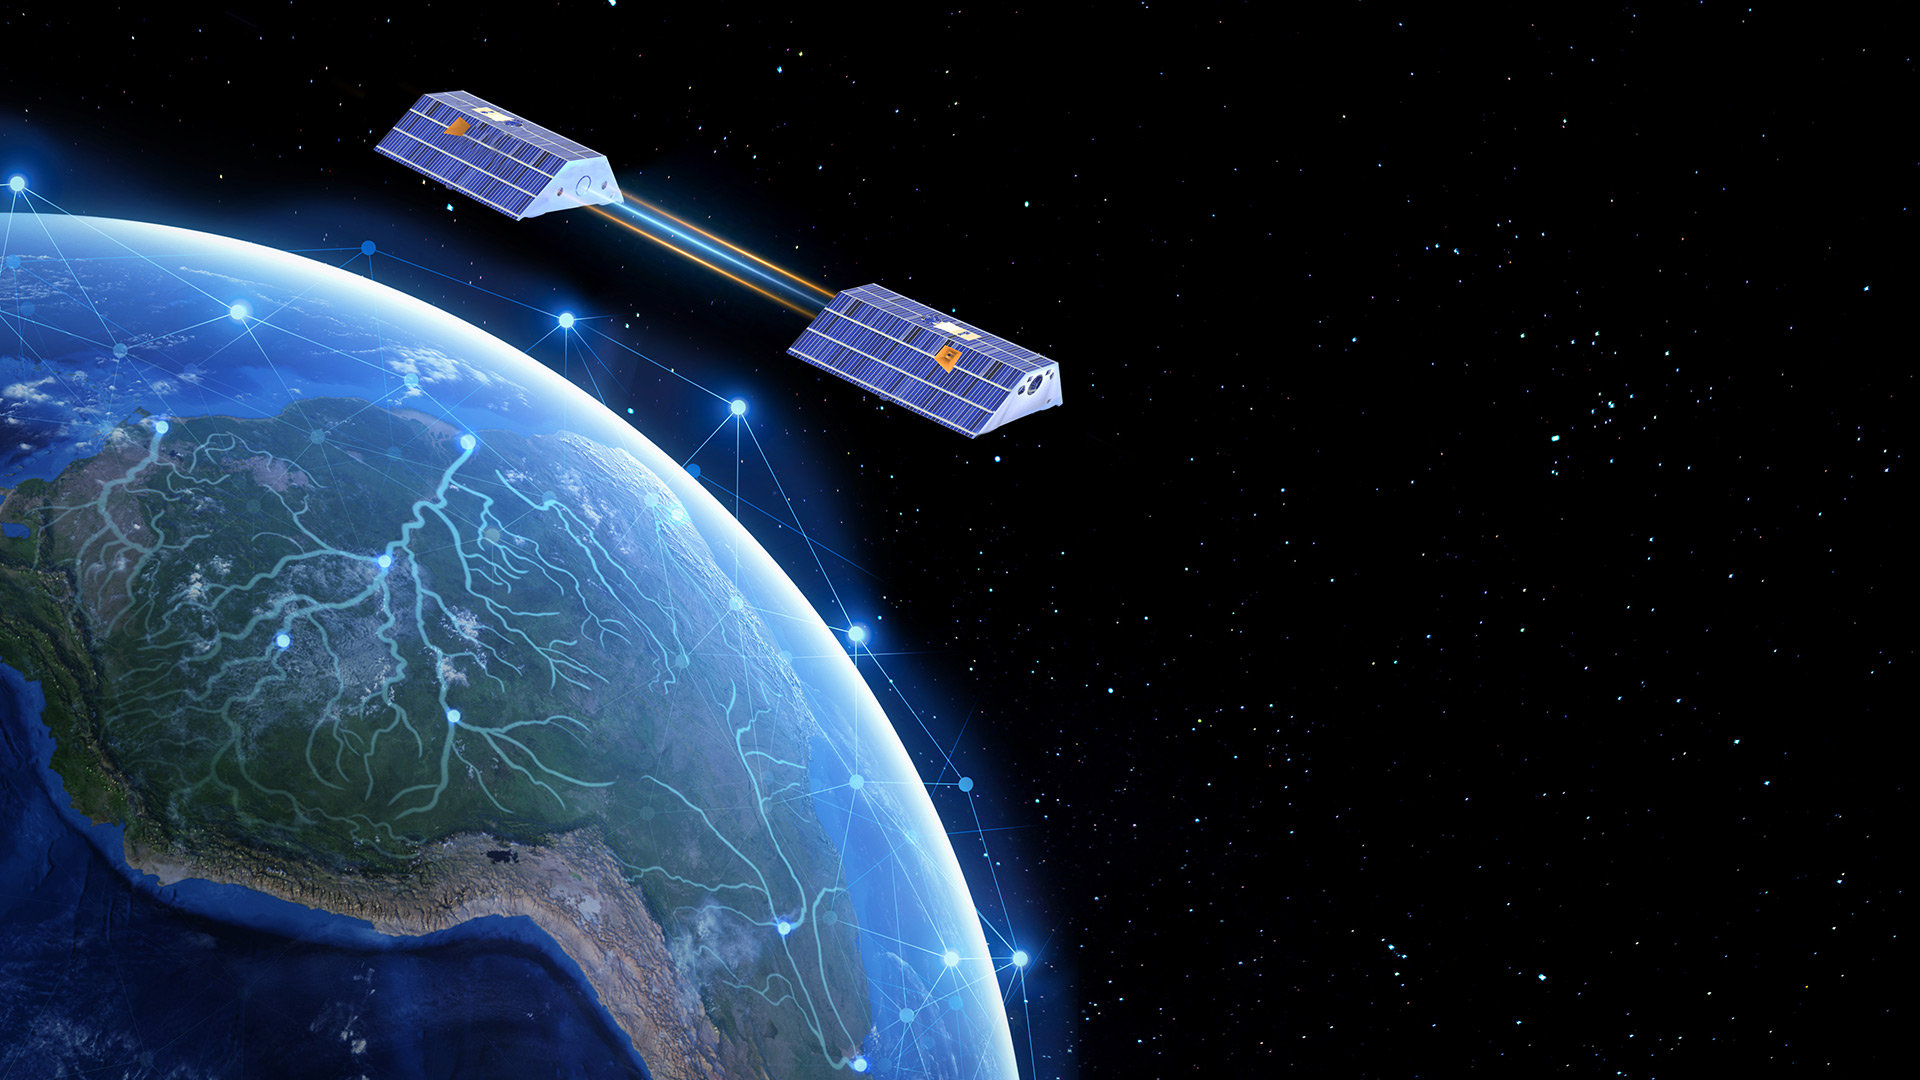 Image of satelite mission